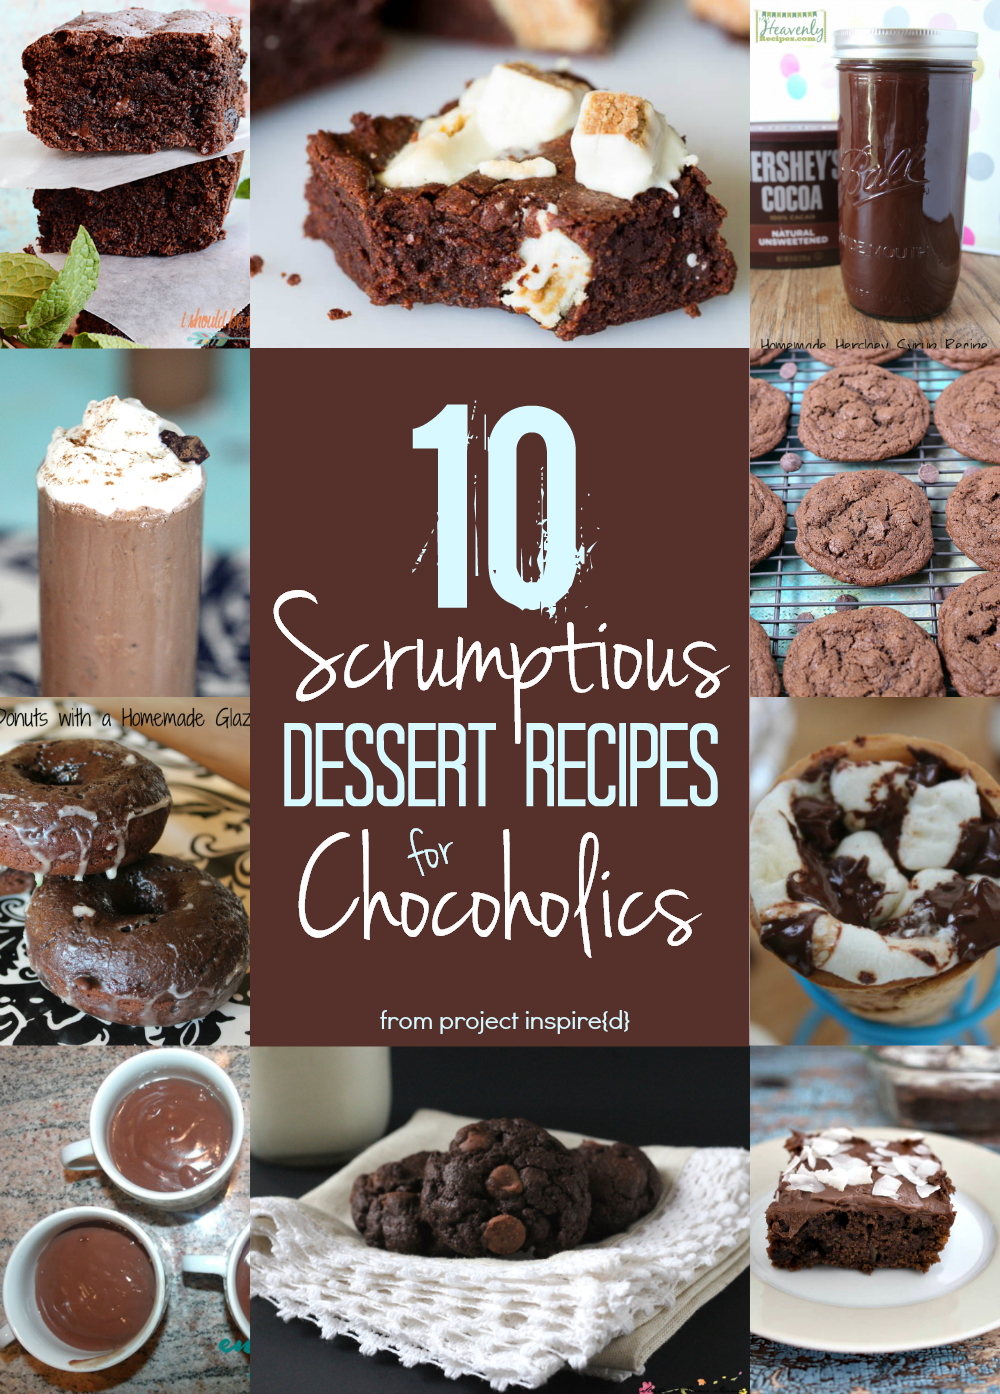 10 Chocolate Dessert Recipes